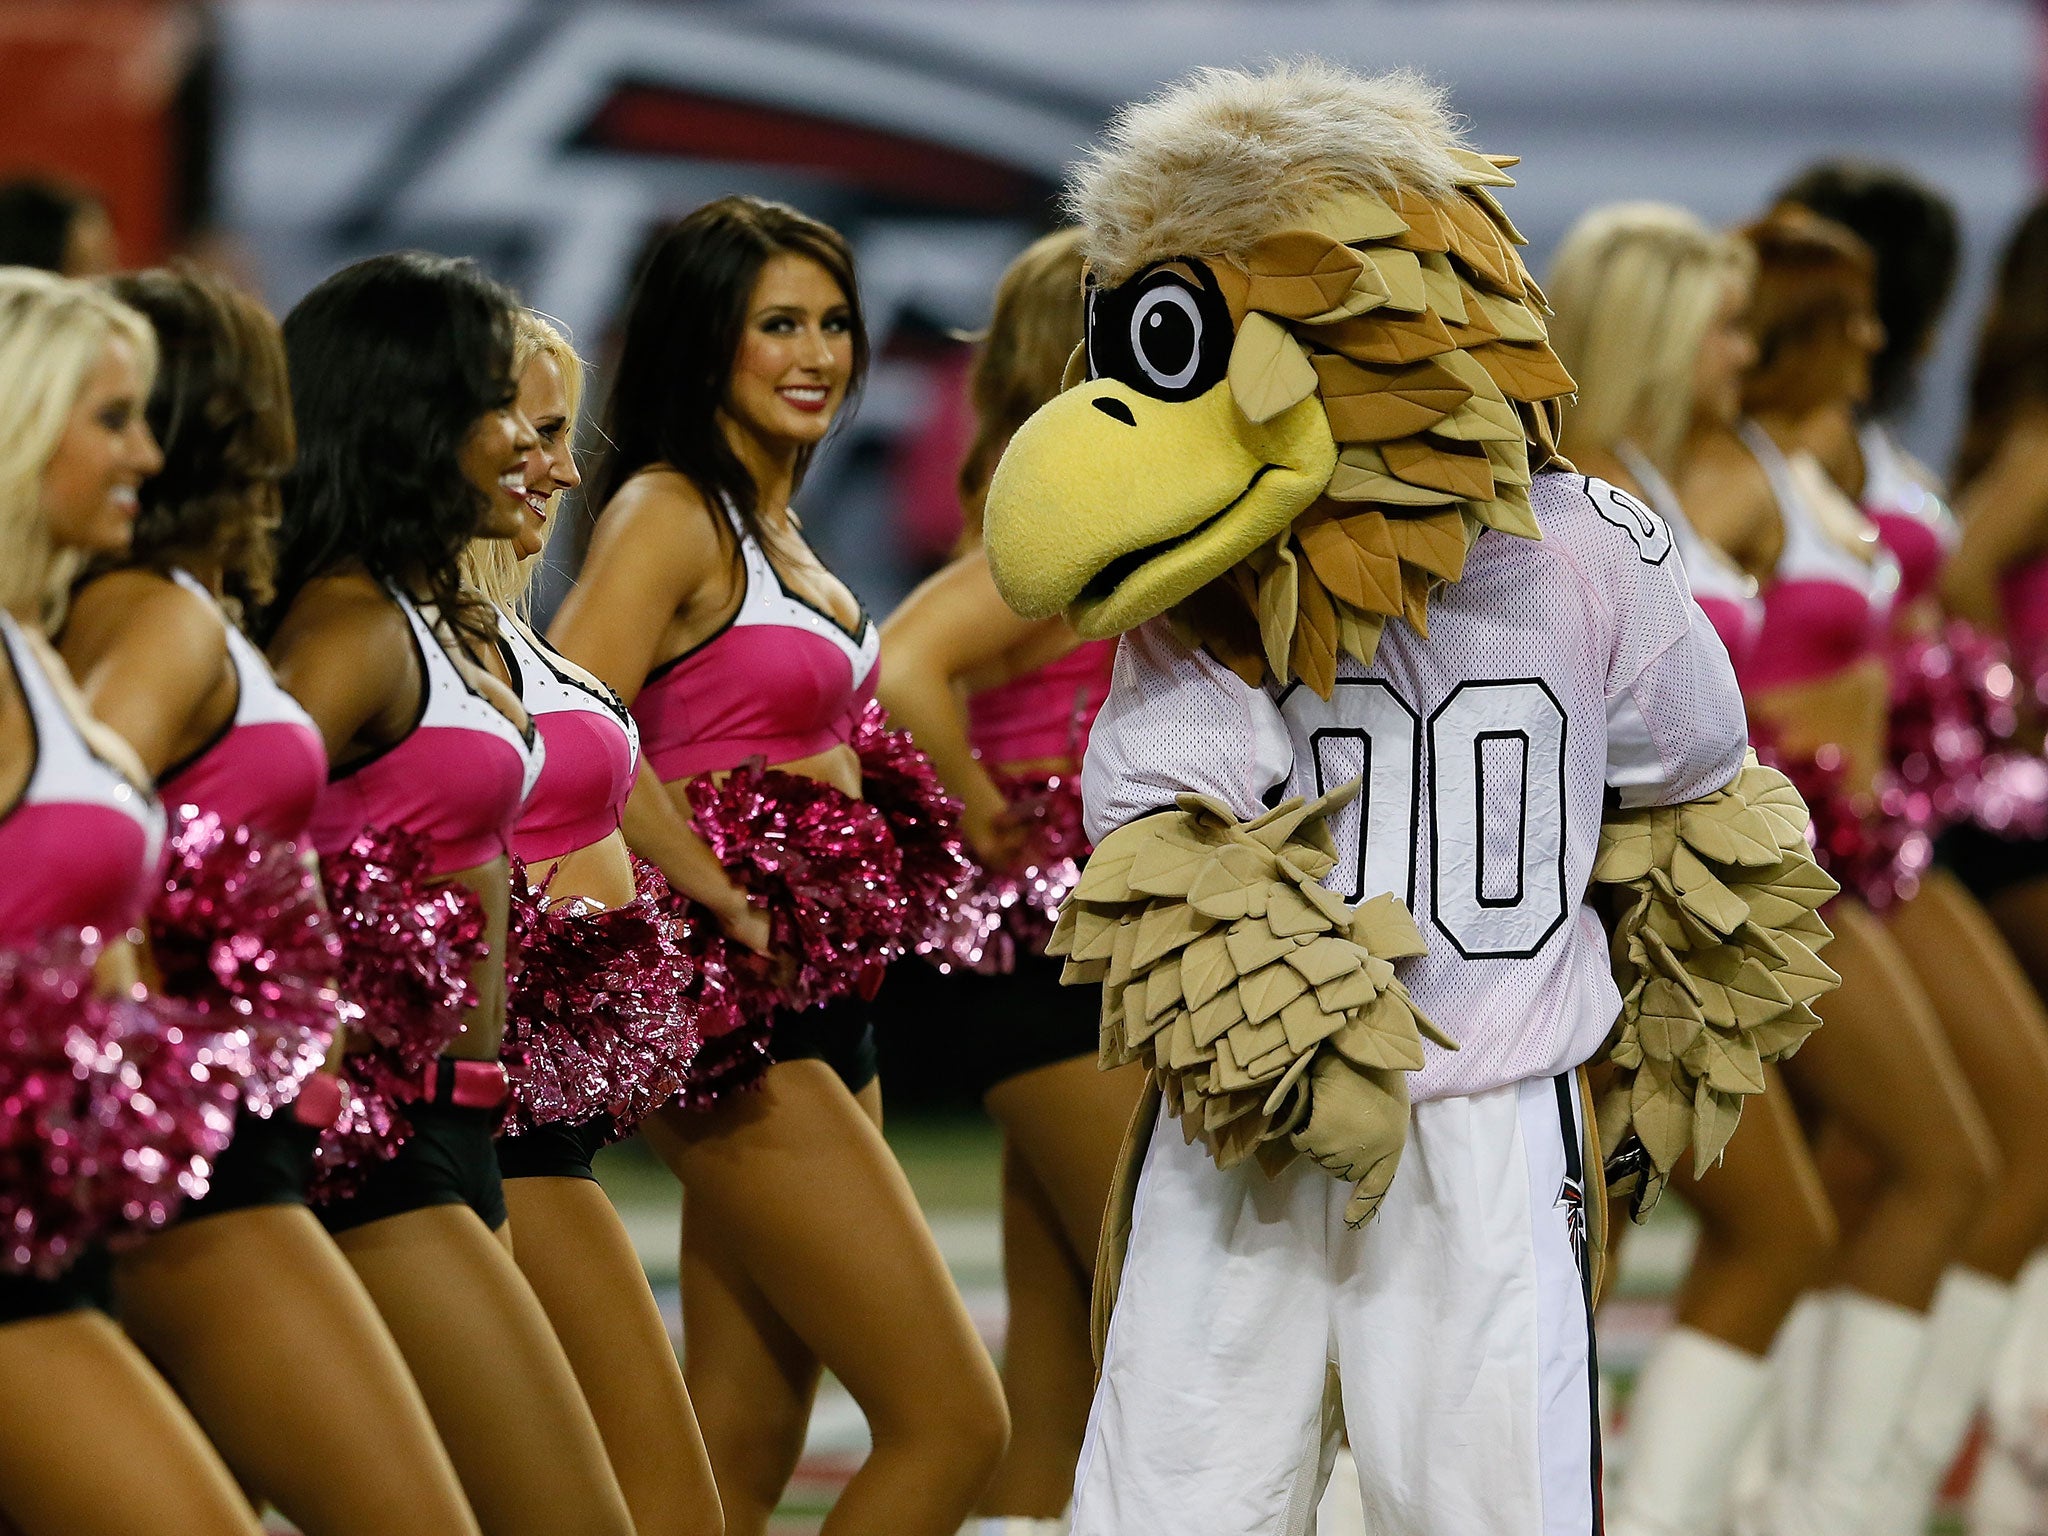 Freddie the Falcon dances with the Atlanta Falcons cheerleaders